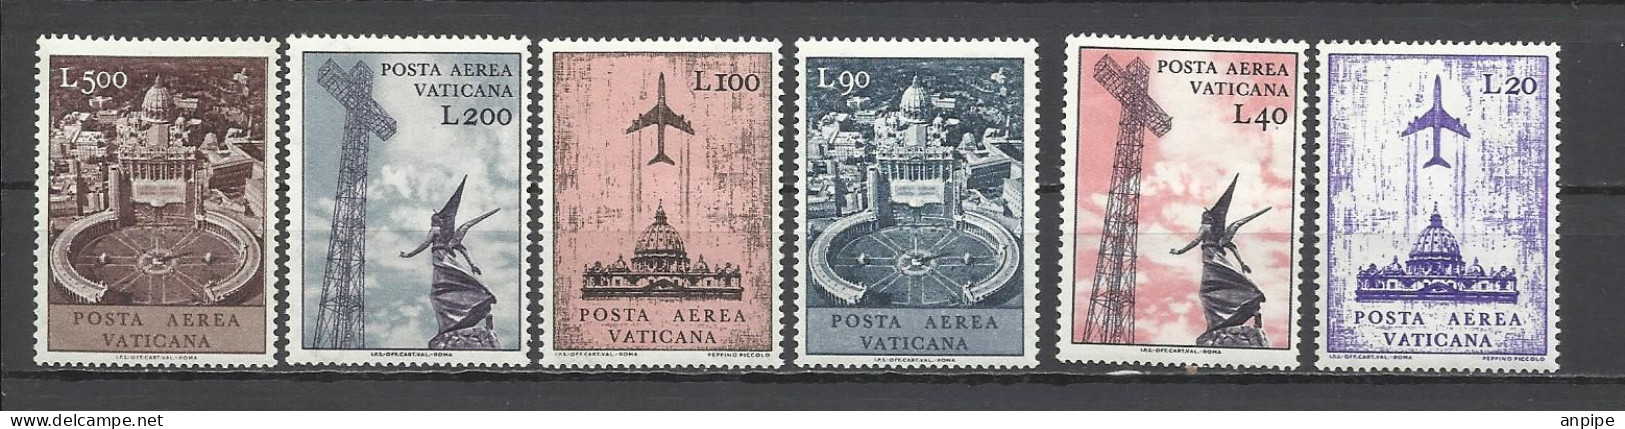 VATICANO - Unused Stamps